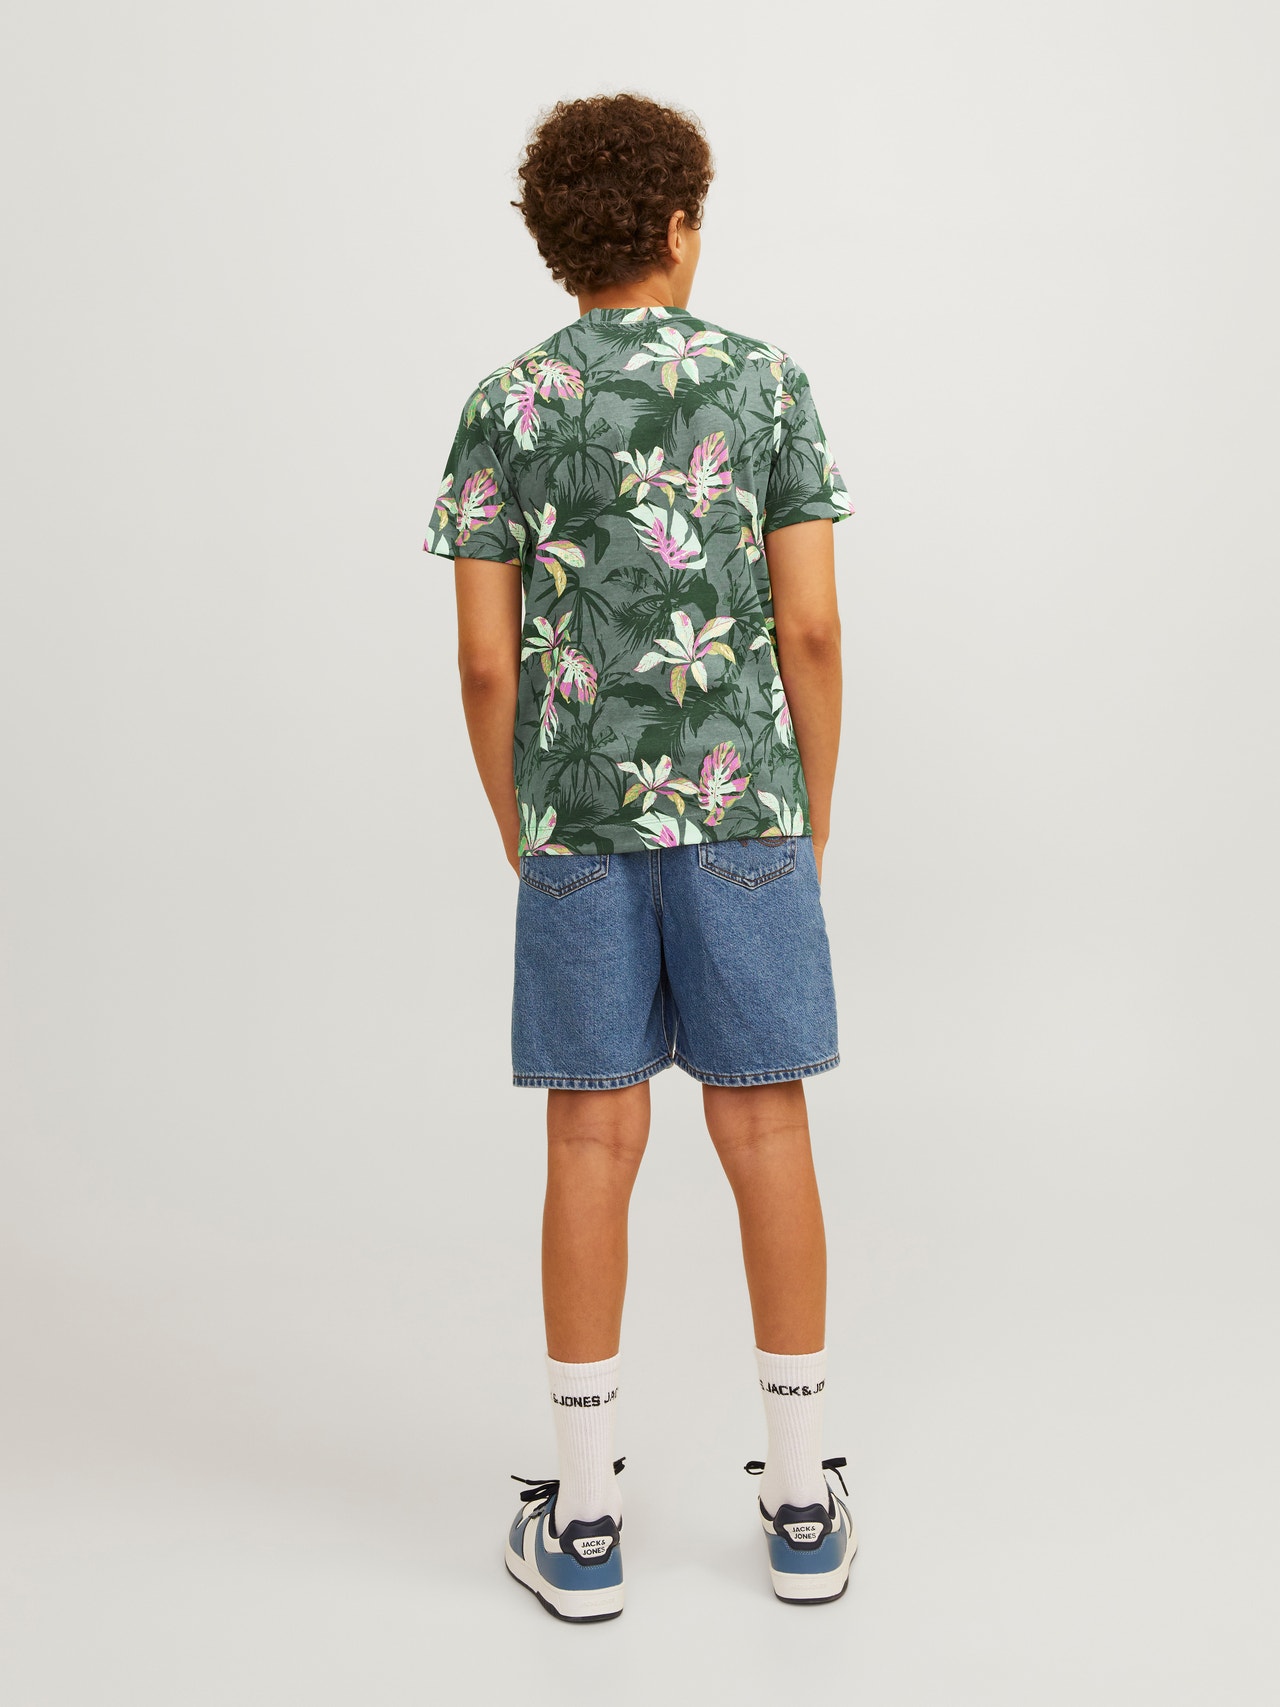 Jack & Jones T-shirt Estampado total Para meninos -Laurel Wreath - 12254029